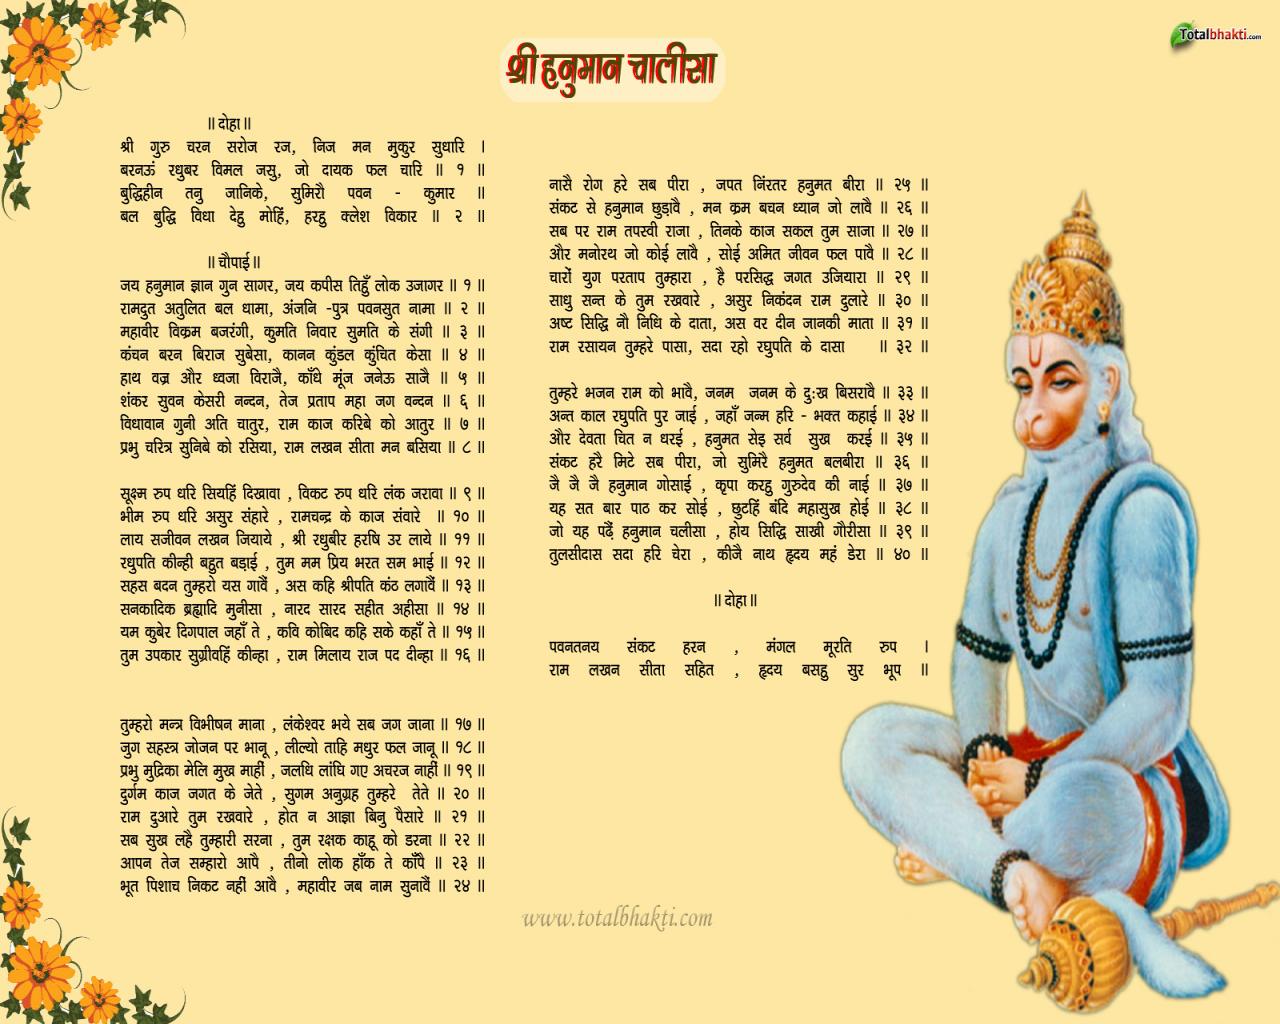 http://2.bp.blogspot.com/-kX_TxXTwfo0/TiRDgdhz_yI/AAAAAAAAAII/kW96rbXPgDw/s1600/Hanuman-Chalisa-hindi-wallpaper.jpg